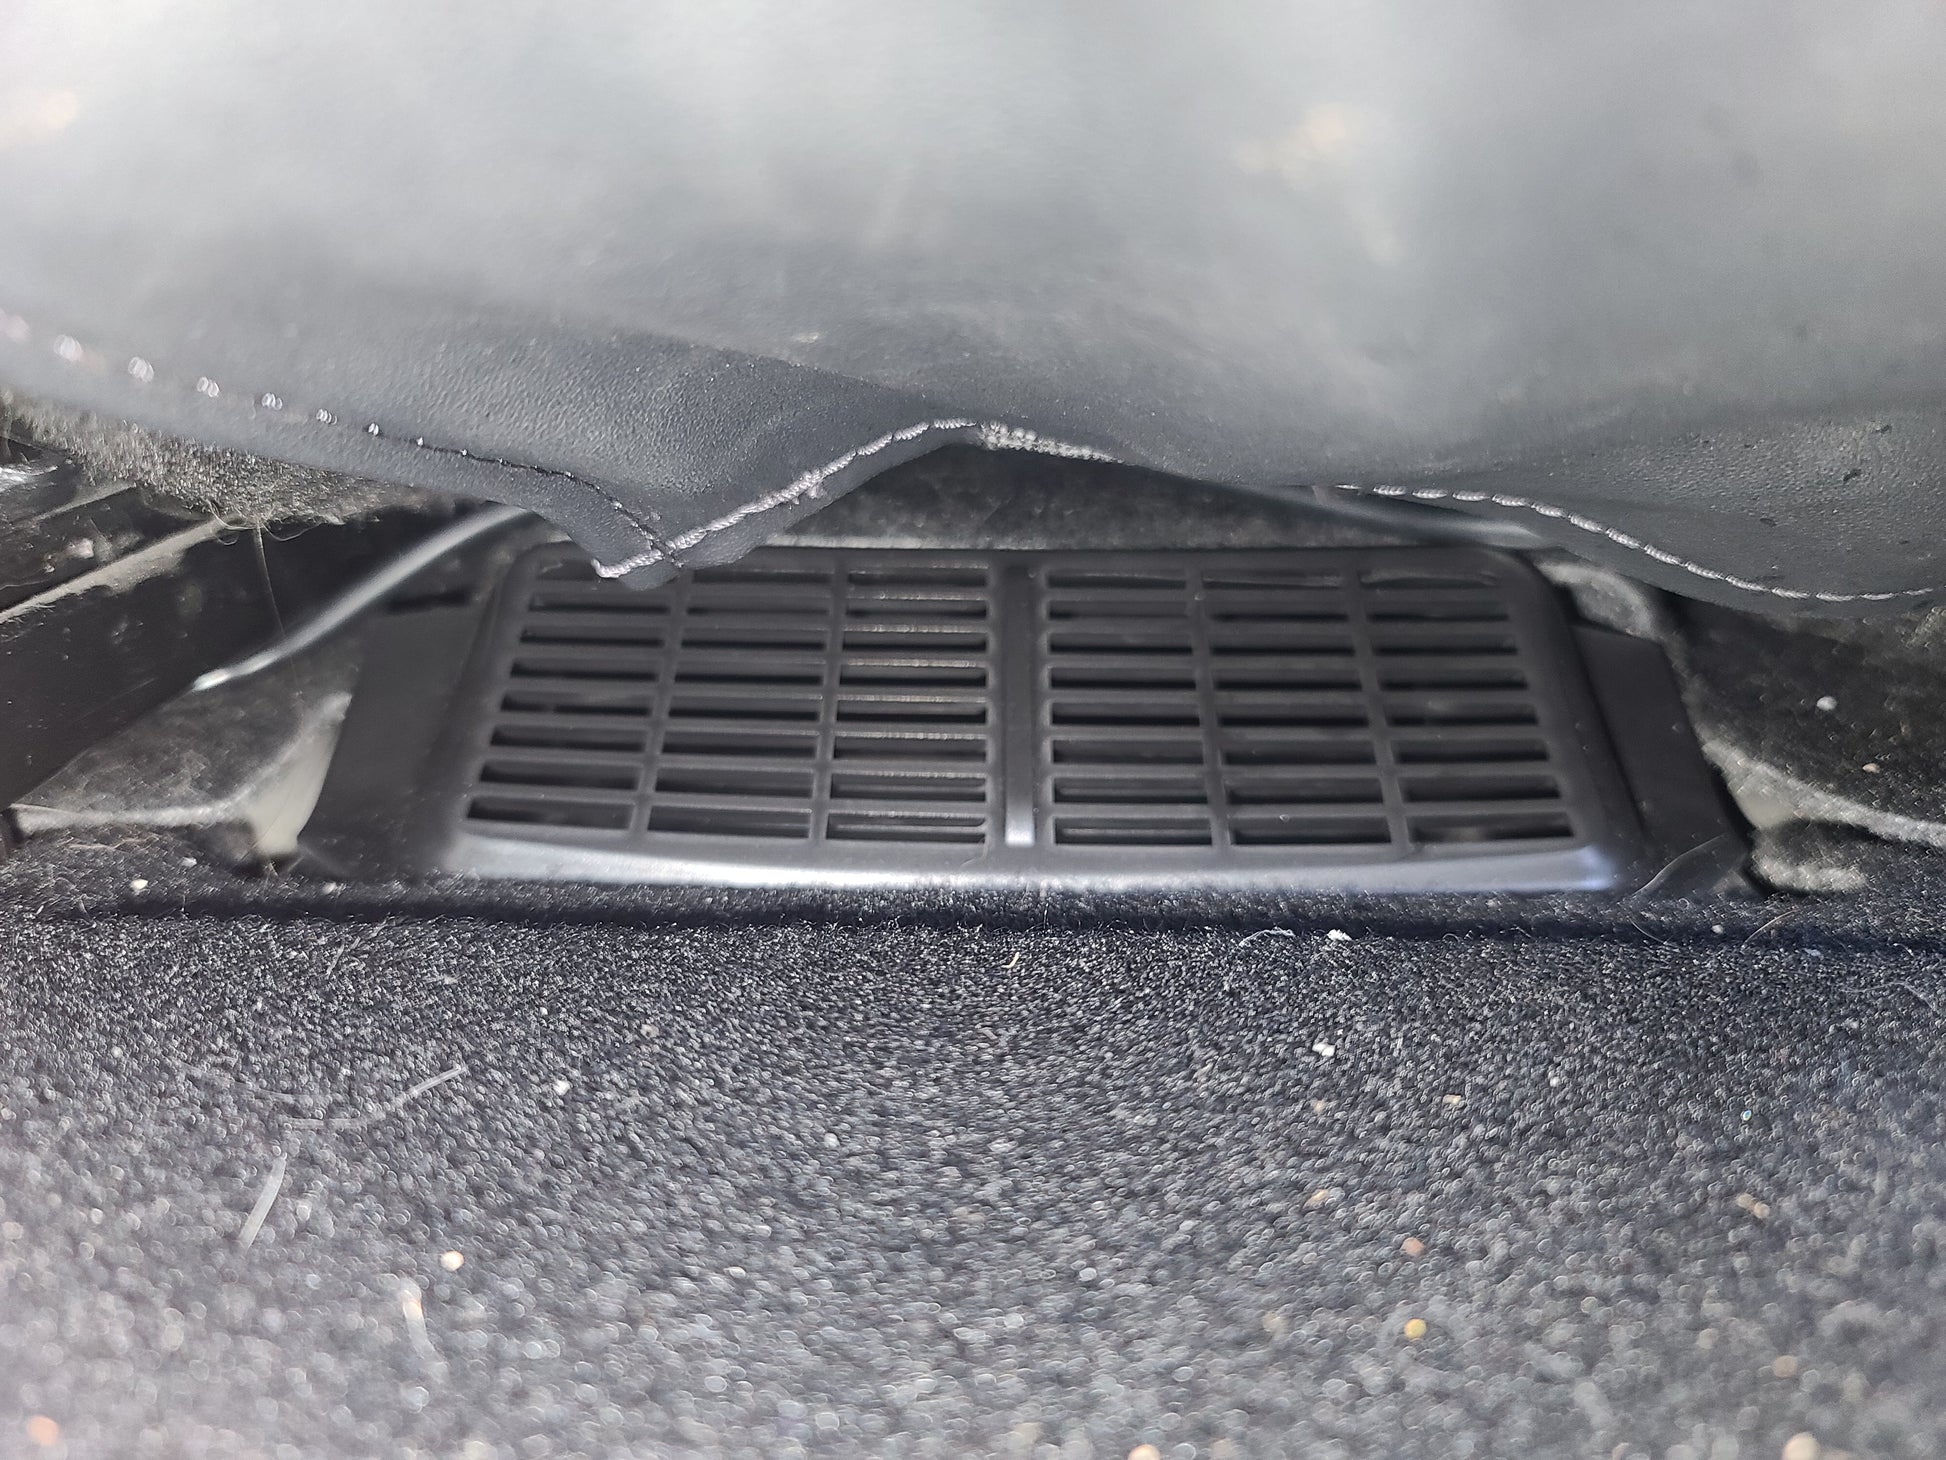 Model 3/Y: Underseat Air Ventilation Filter Cover (2 PCs)